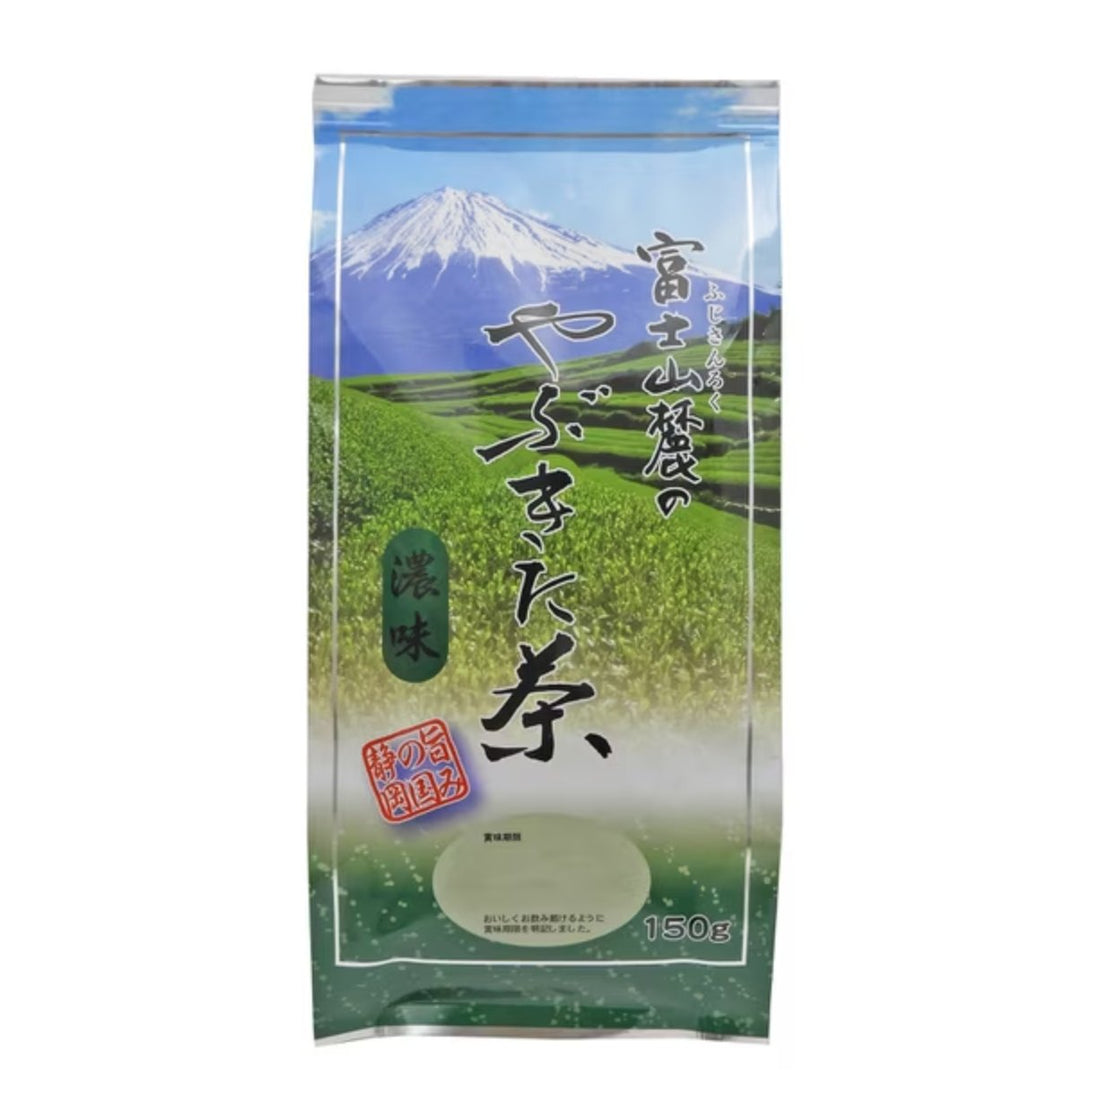 Oigawa Tea Garden Shimada Yabukita tea at the foot of Mt. Fuji, strong flavor 150g - NihonMura